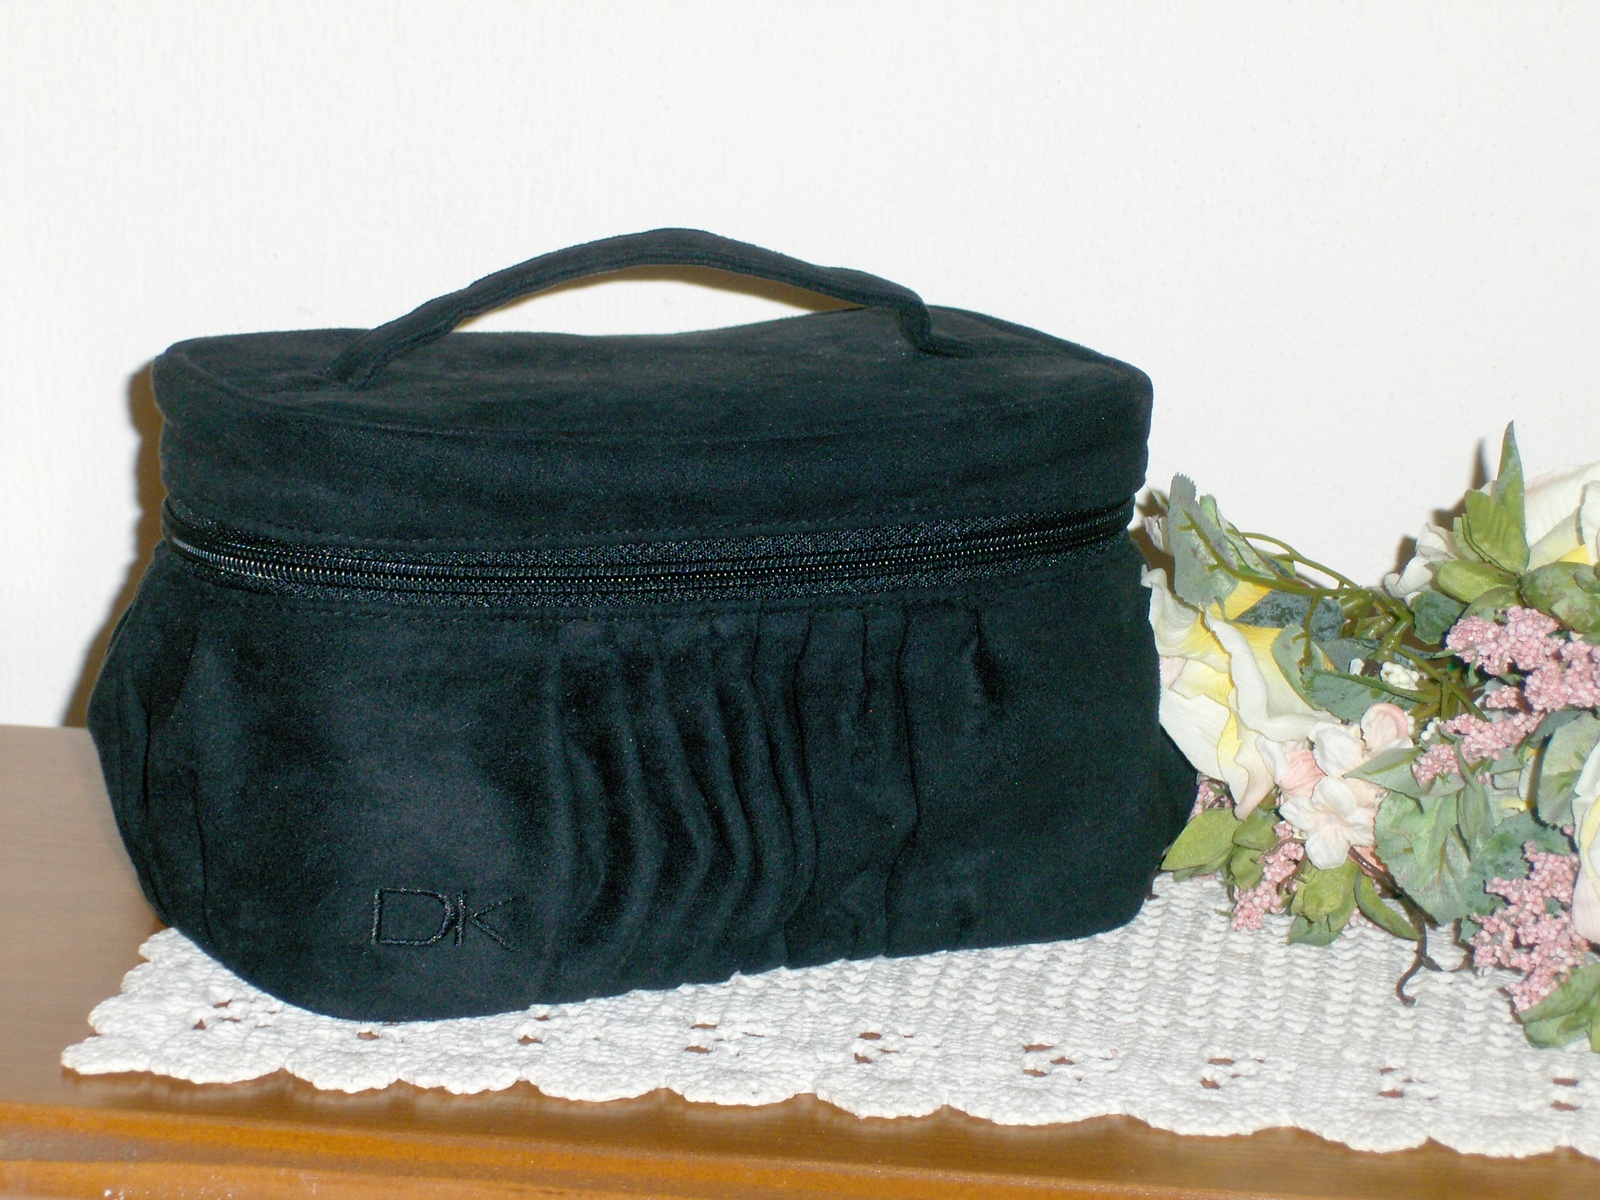 Donna Karan Cosmetics Bag Train Case Makeup Toiletries Cashmere Mist Black Tote  - $24.99